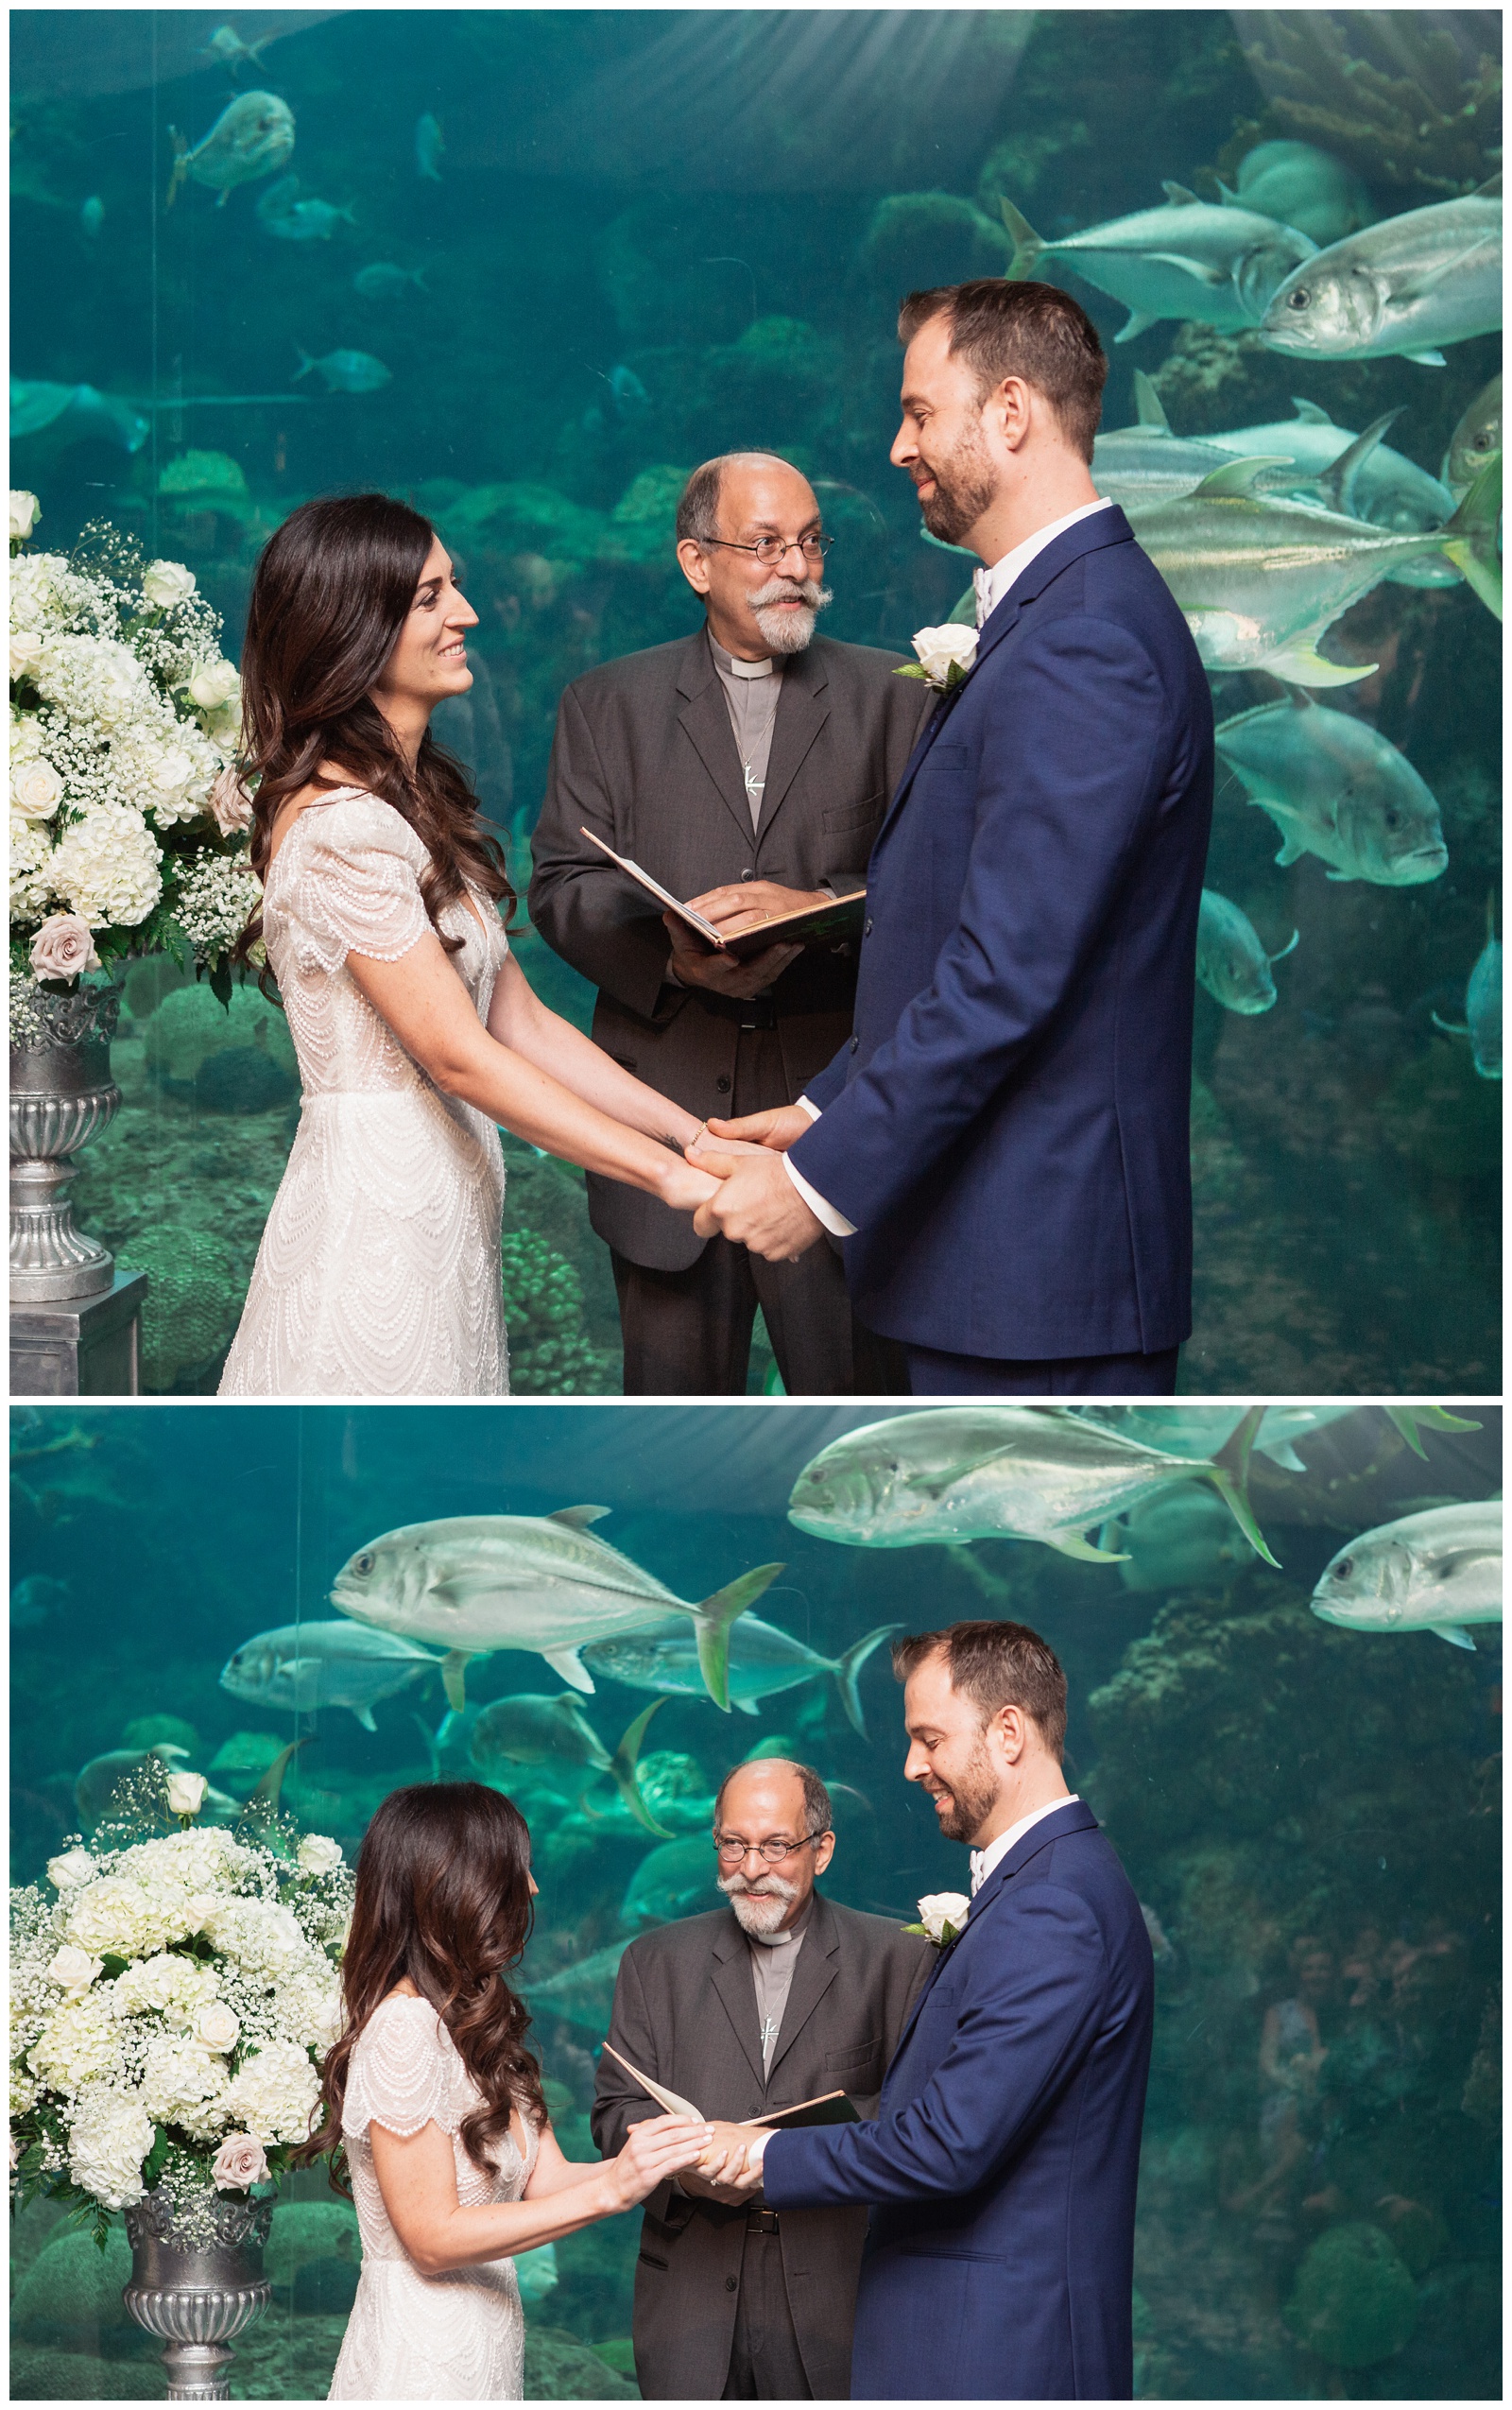 The Florida Aquarium ceremony | Matlock and Kelly Photography